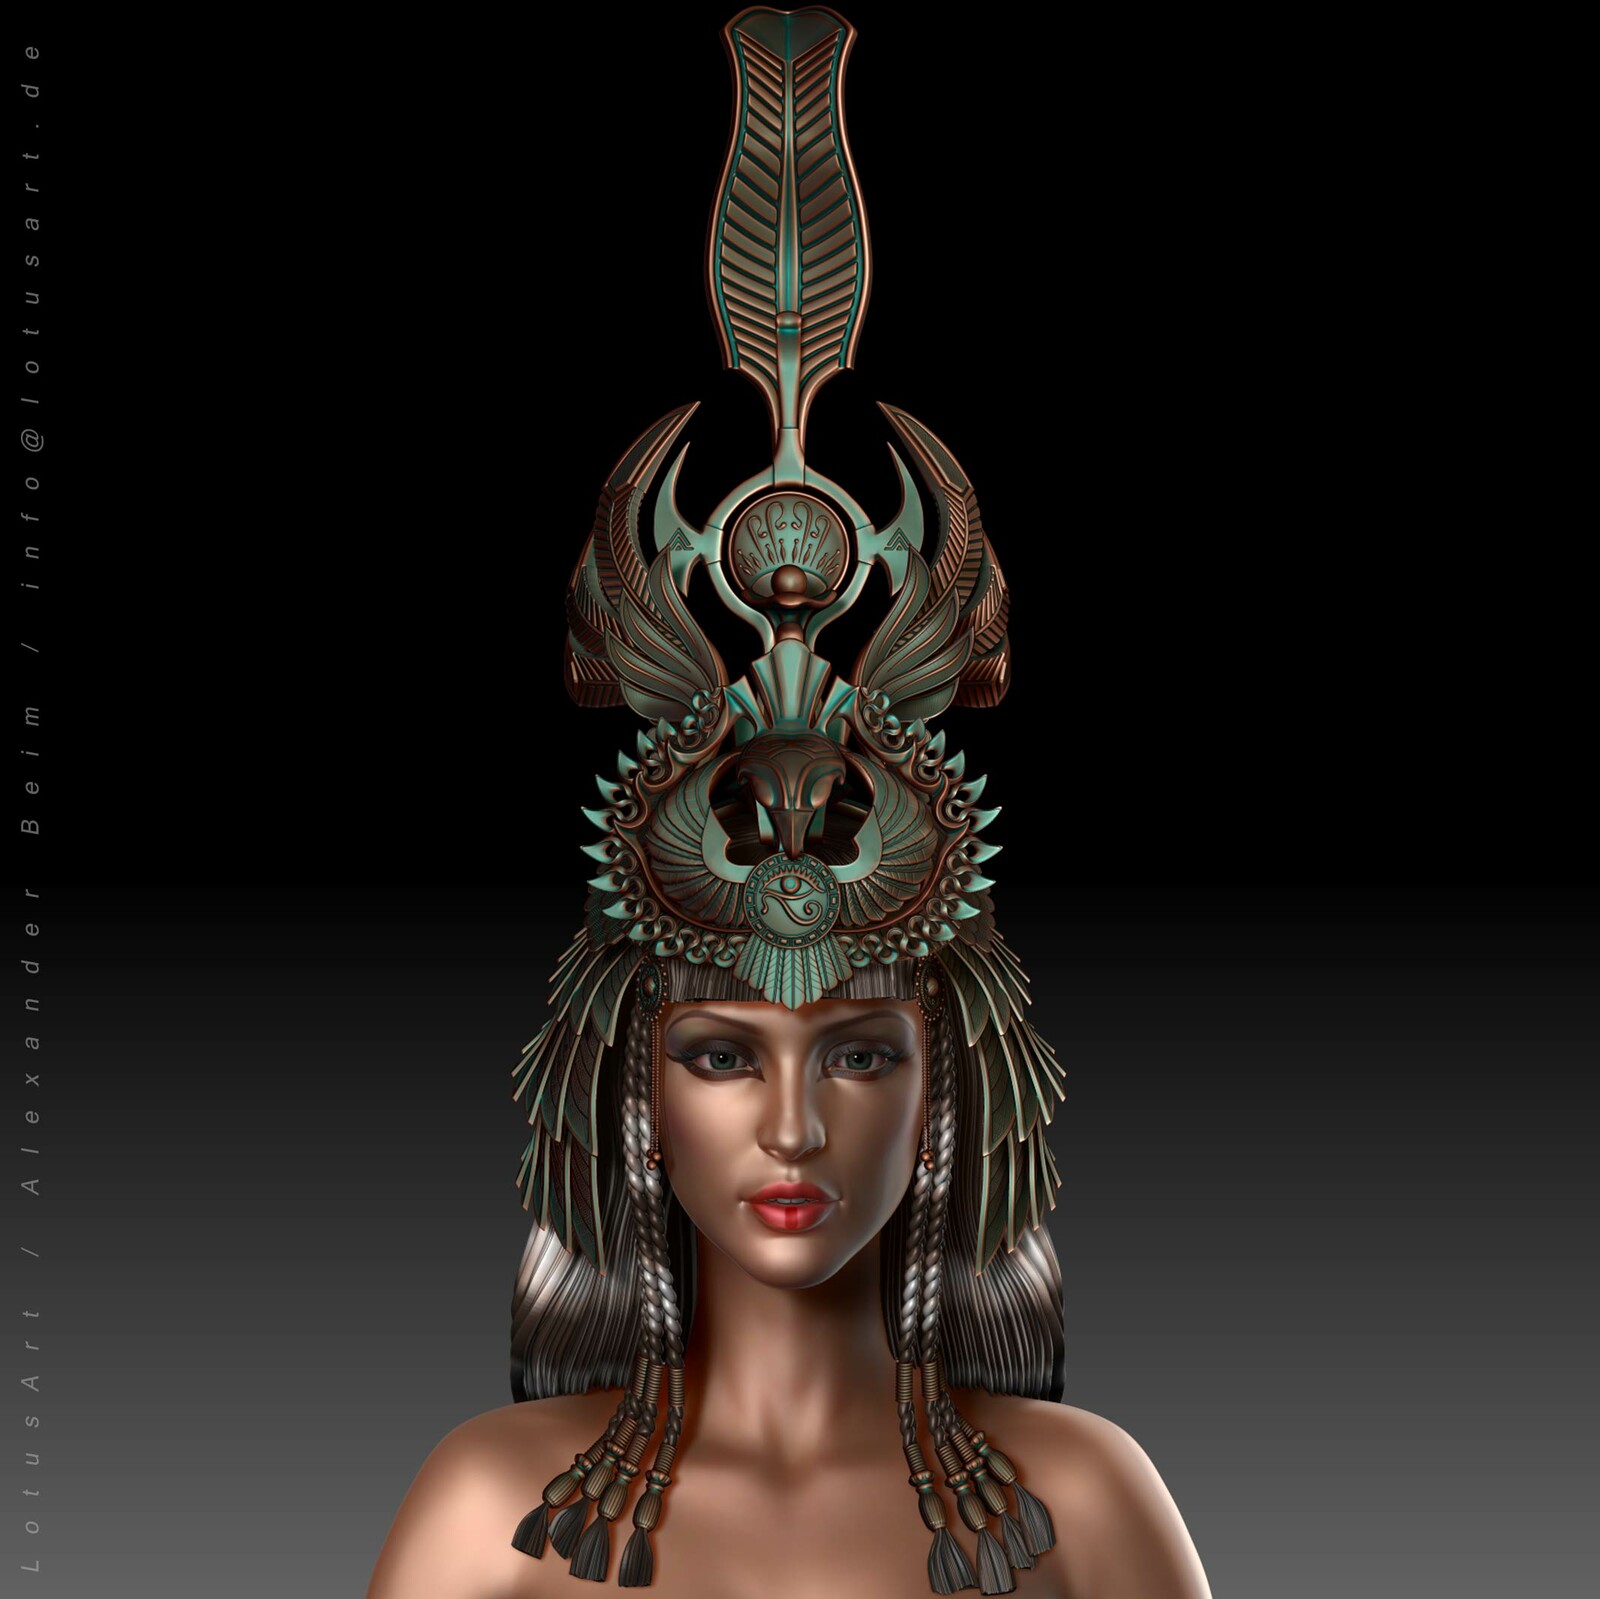 Akiranime cleopatra. 3d Клеопатра доминатрикс. Клеопатра с короной на голове. Клеопатра арт.